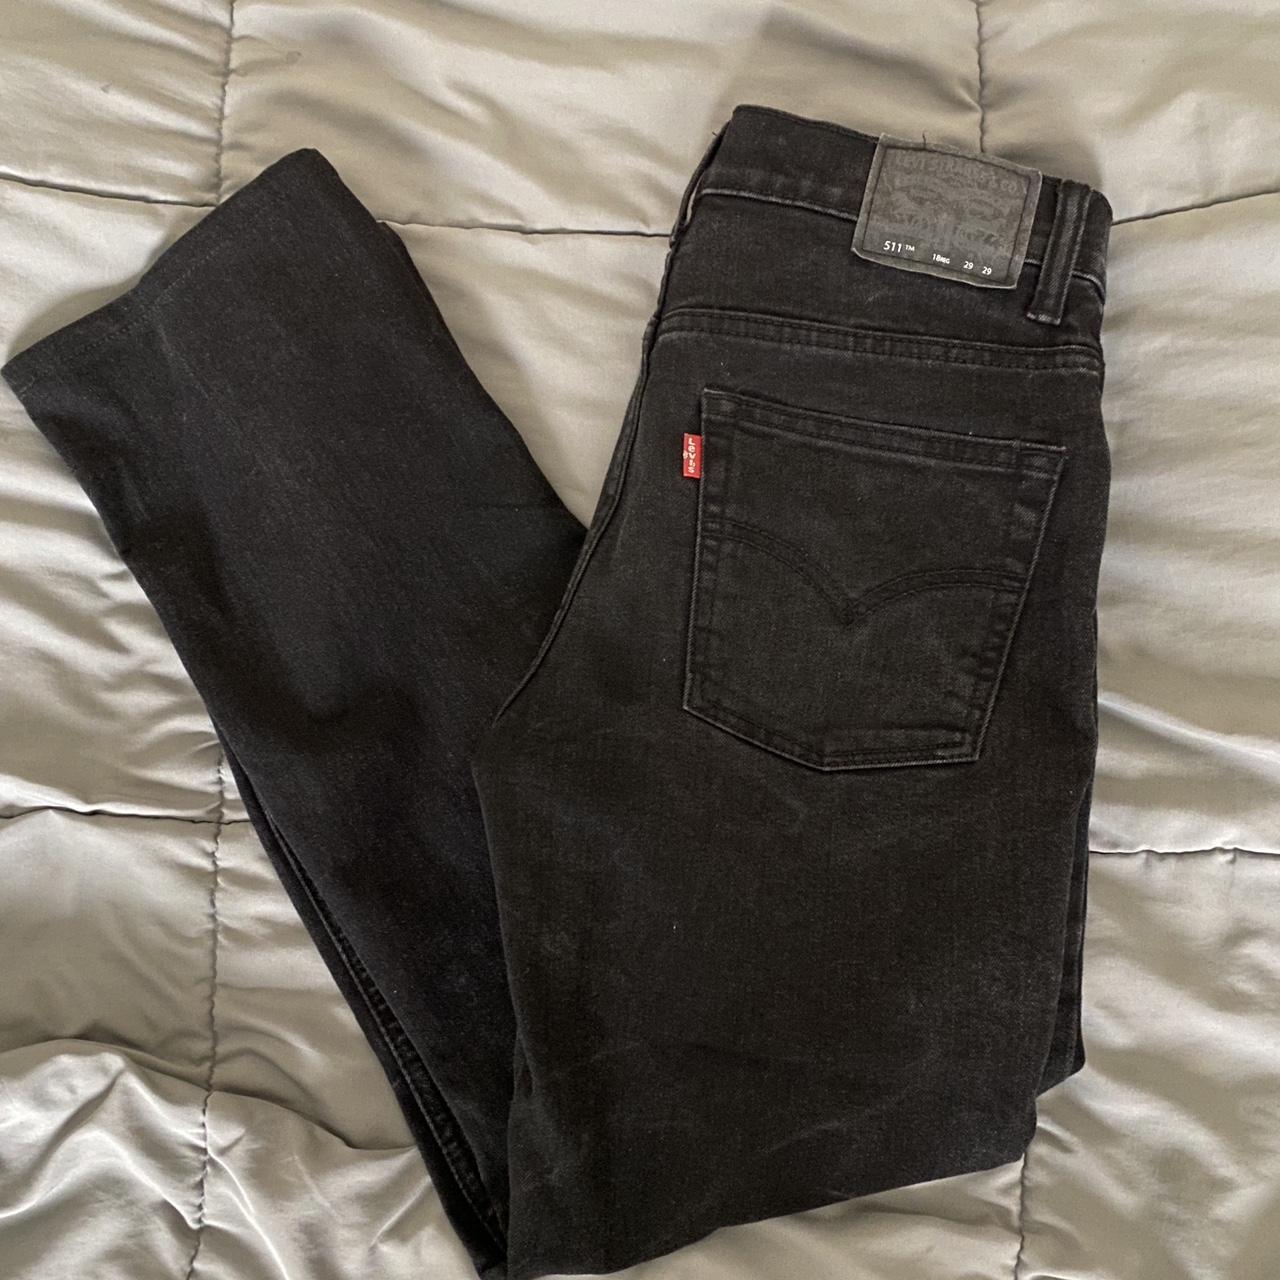 Levis 511 slim fit black jeans Fits like 28x27 - Depop